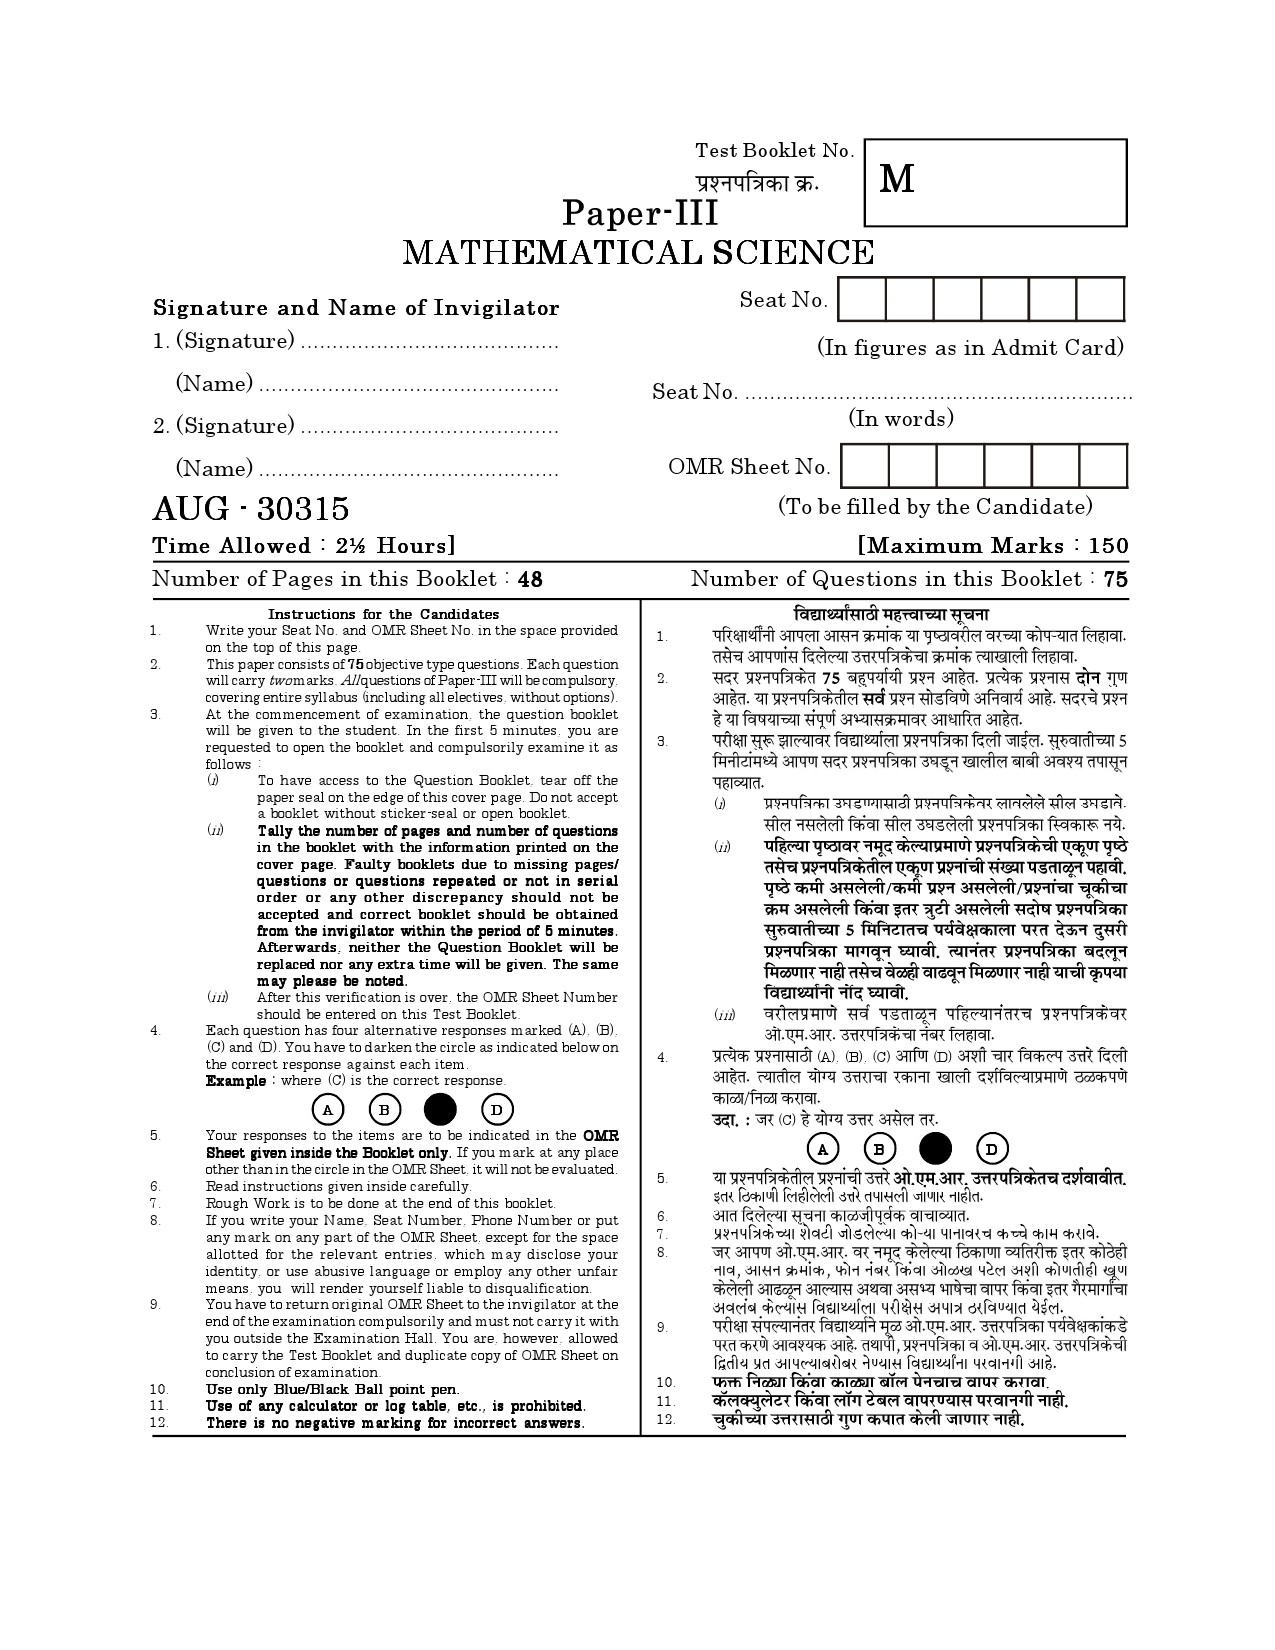 Maharashtra SET Mathematical Sciences Question Paper III August 2015 1